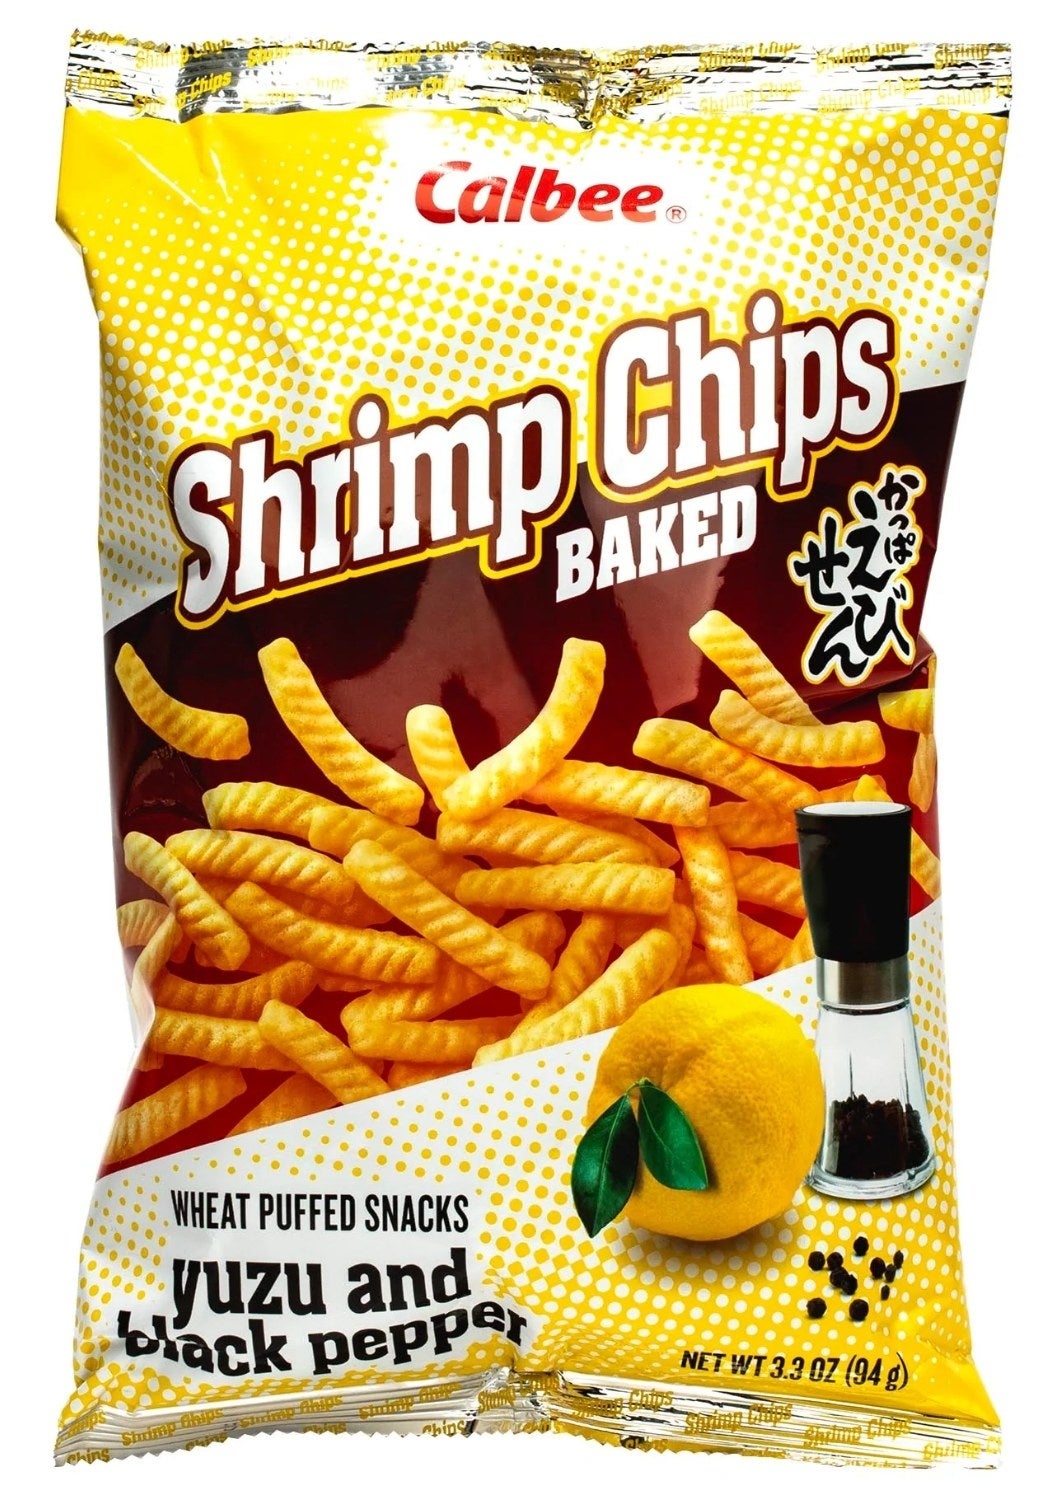 Calbee shrimp chips